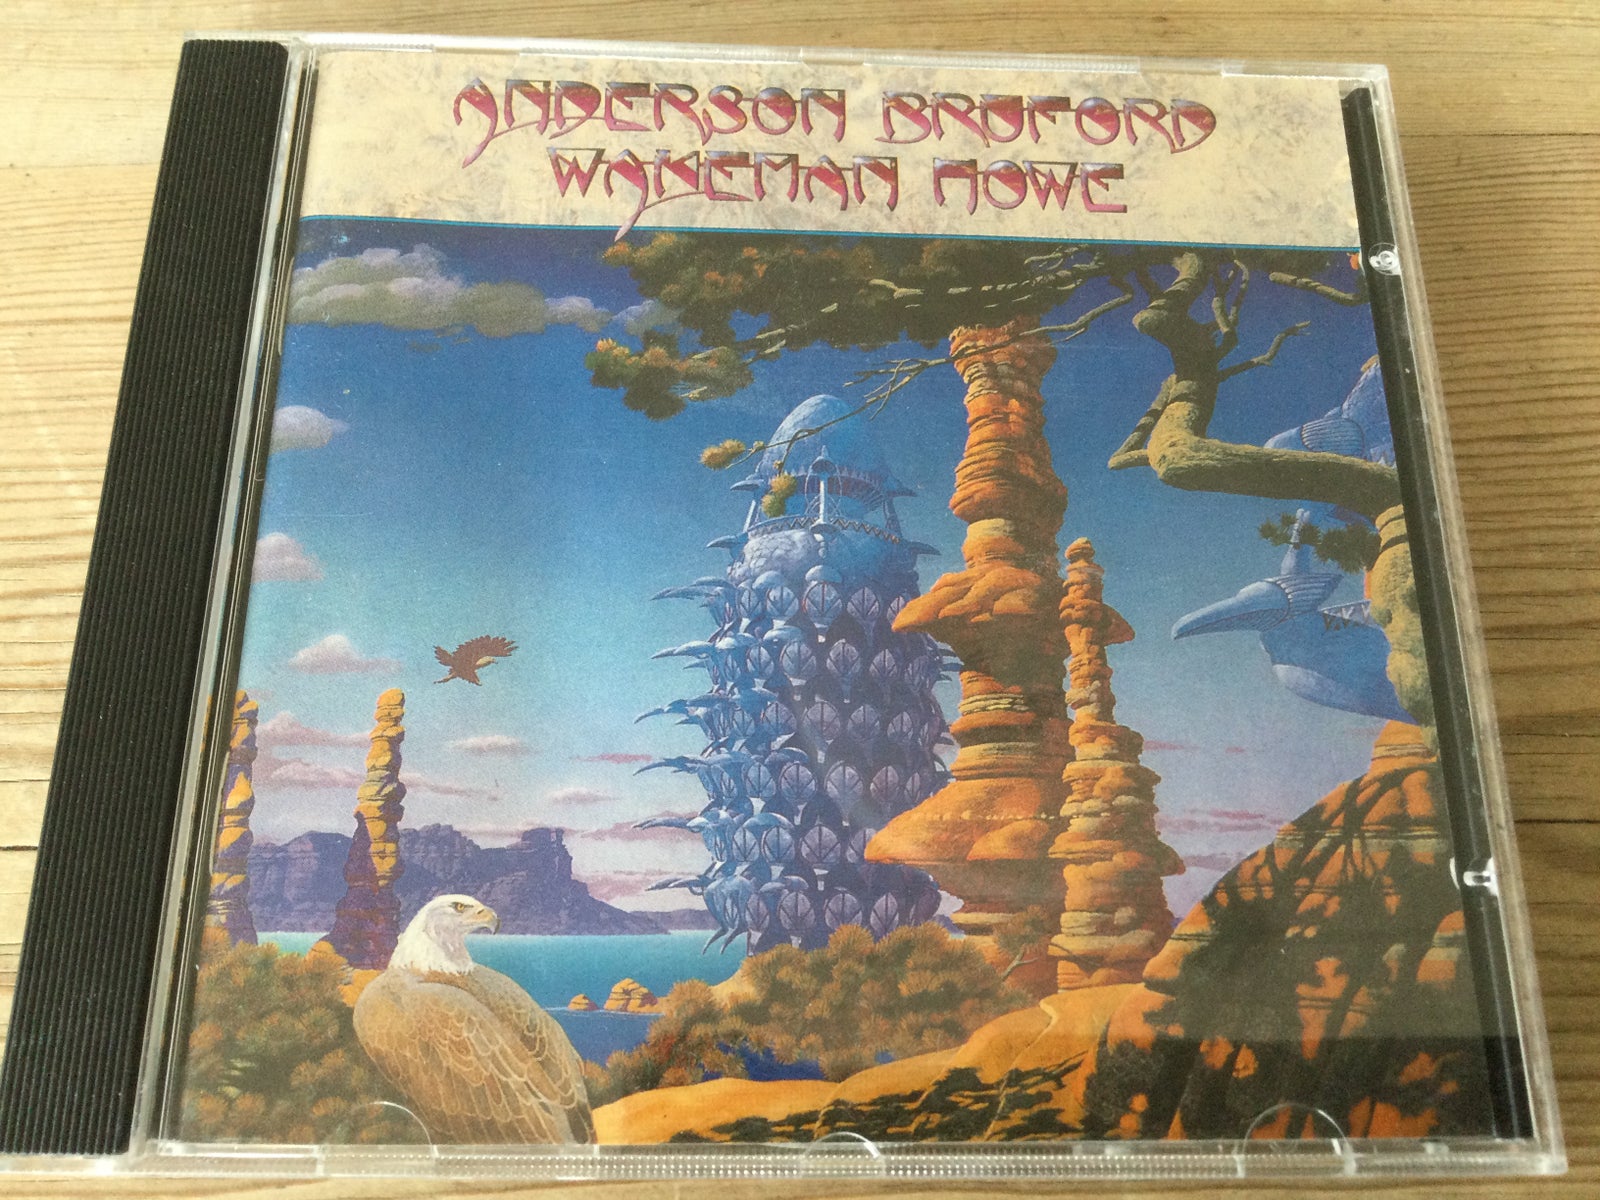 Rick Wakeman: 6 cd'er, rock